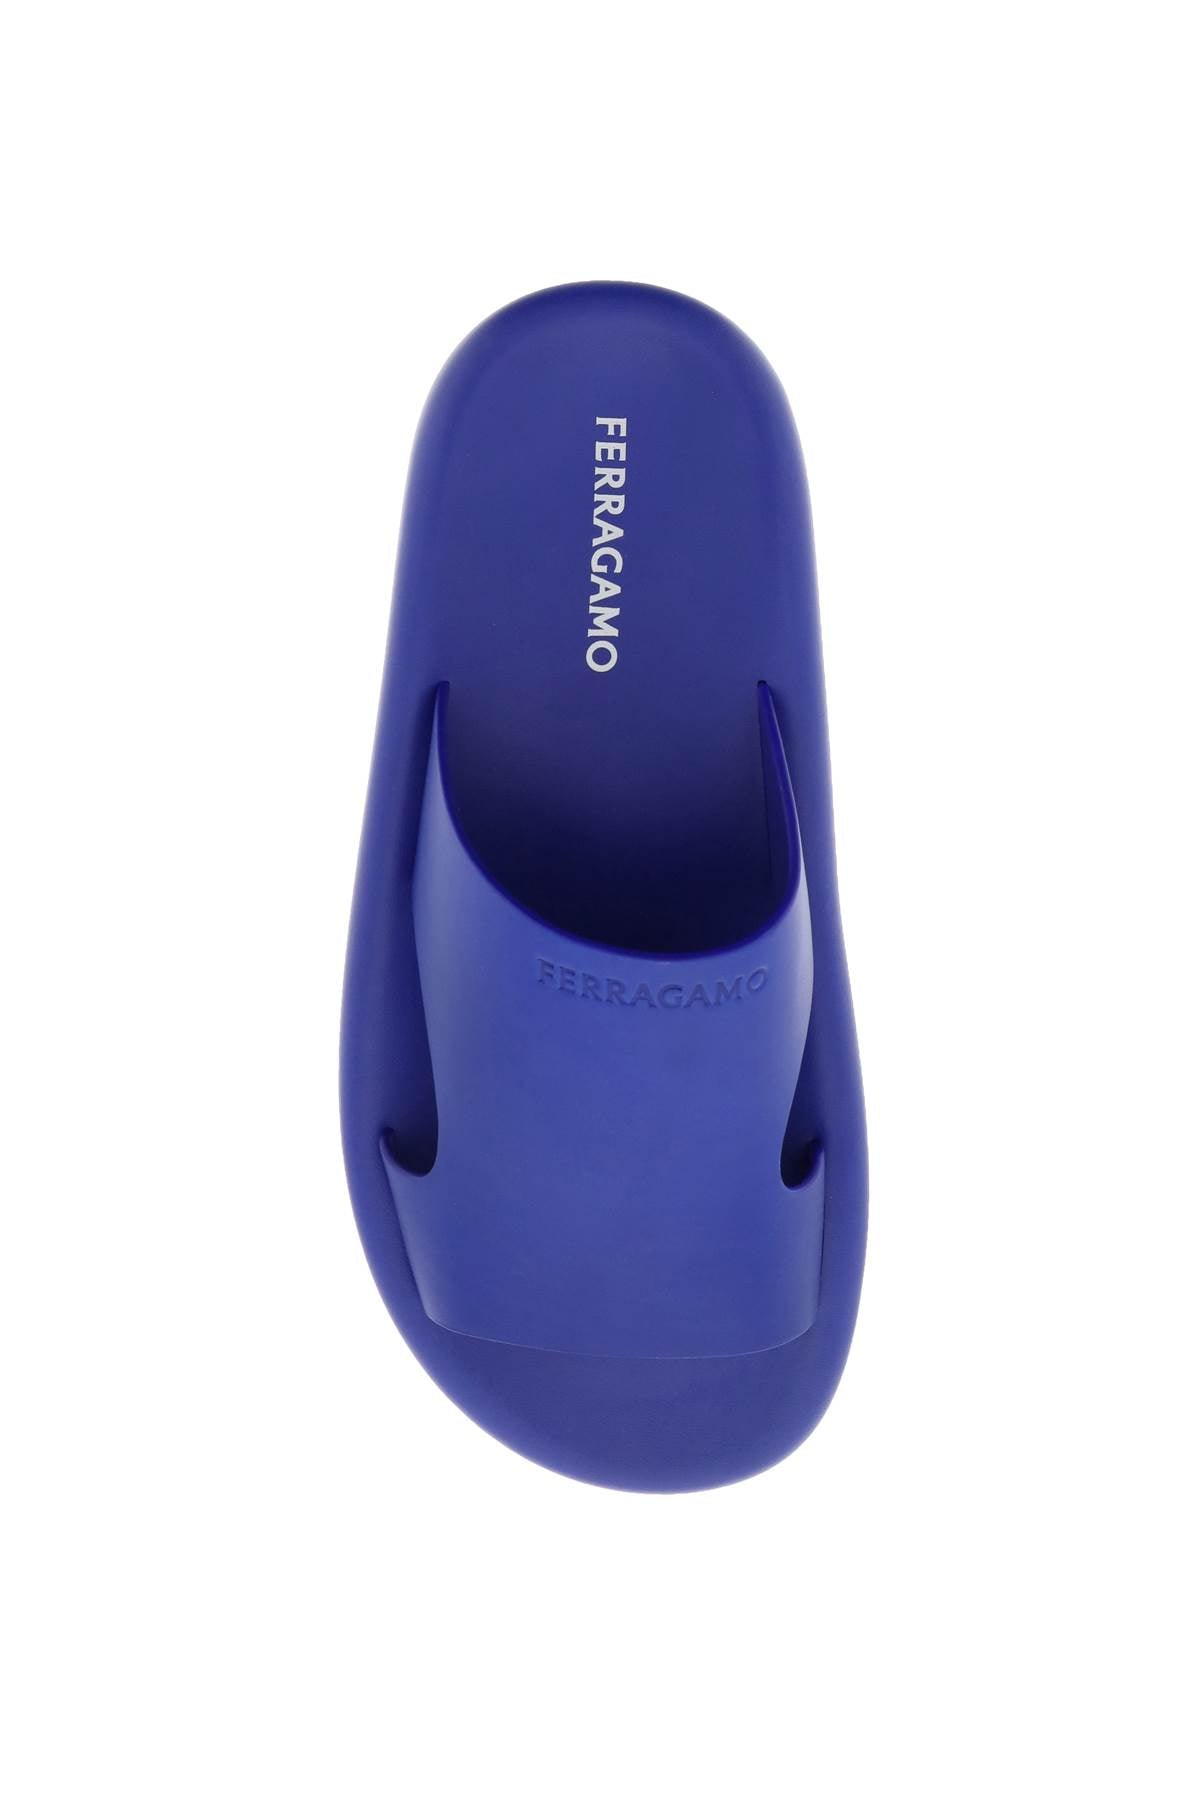 FERRAGAMO Cut-Out Slide Sandals for Men in Blue